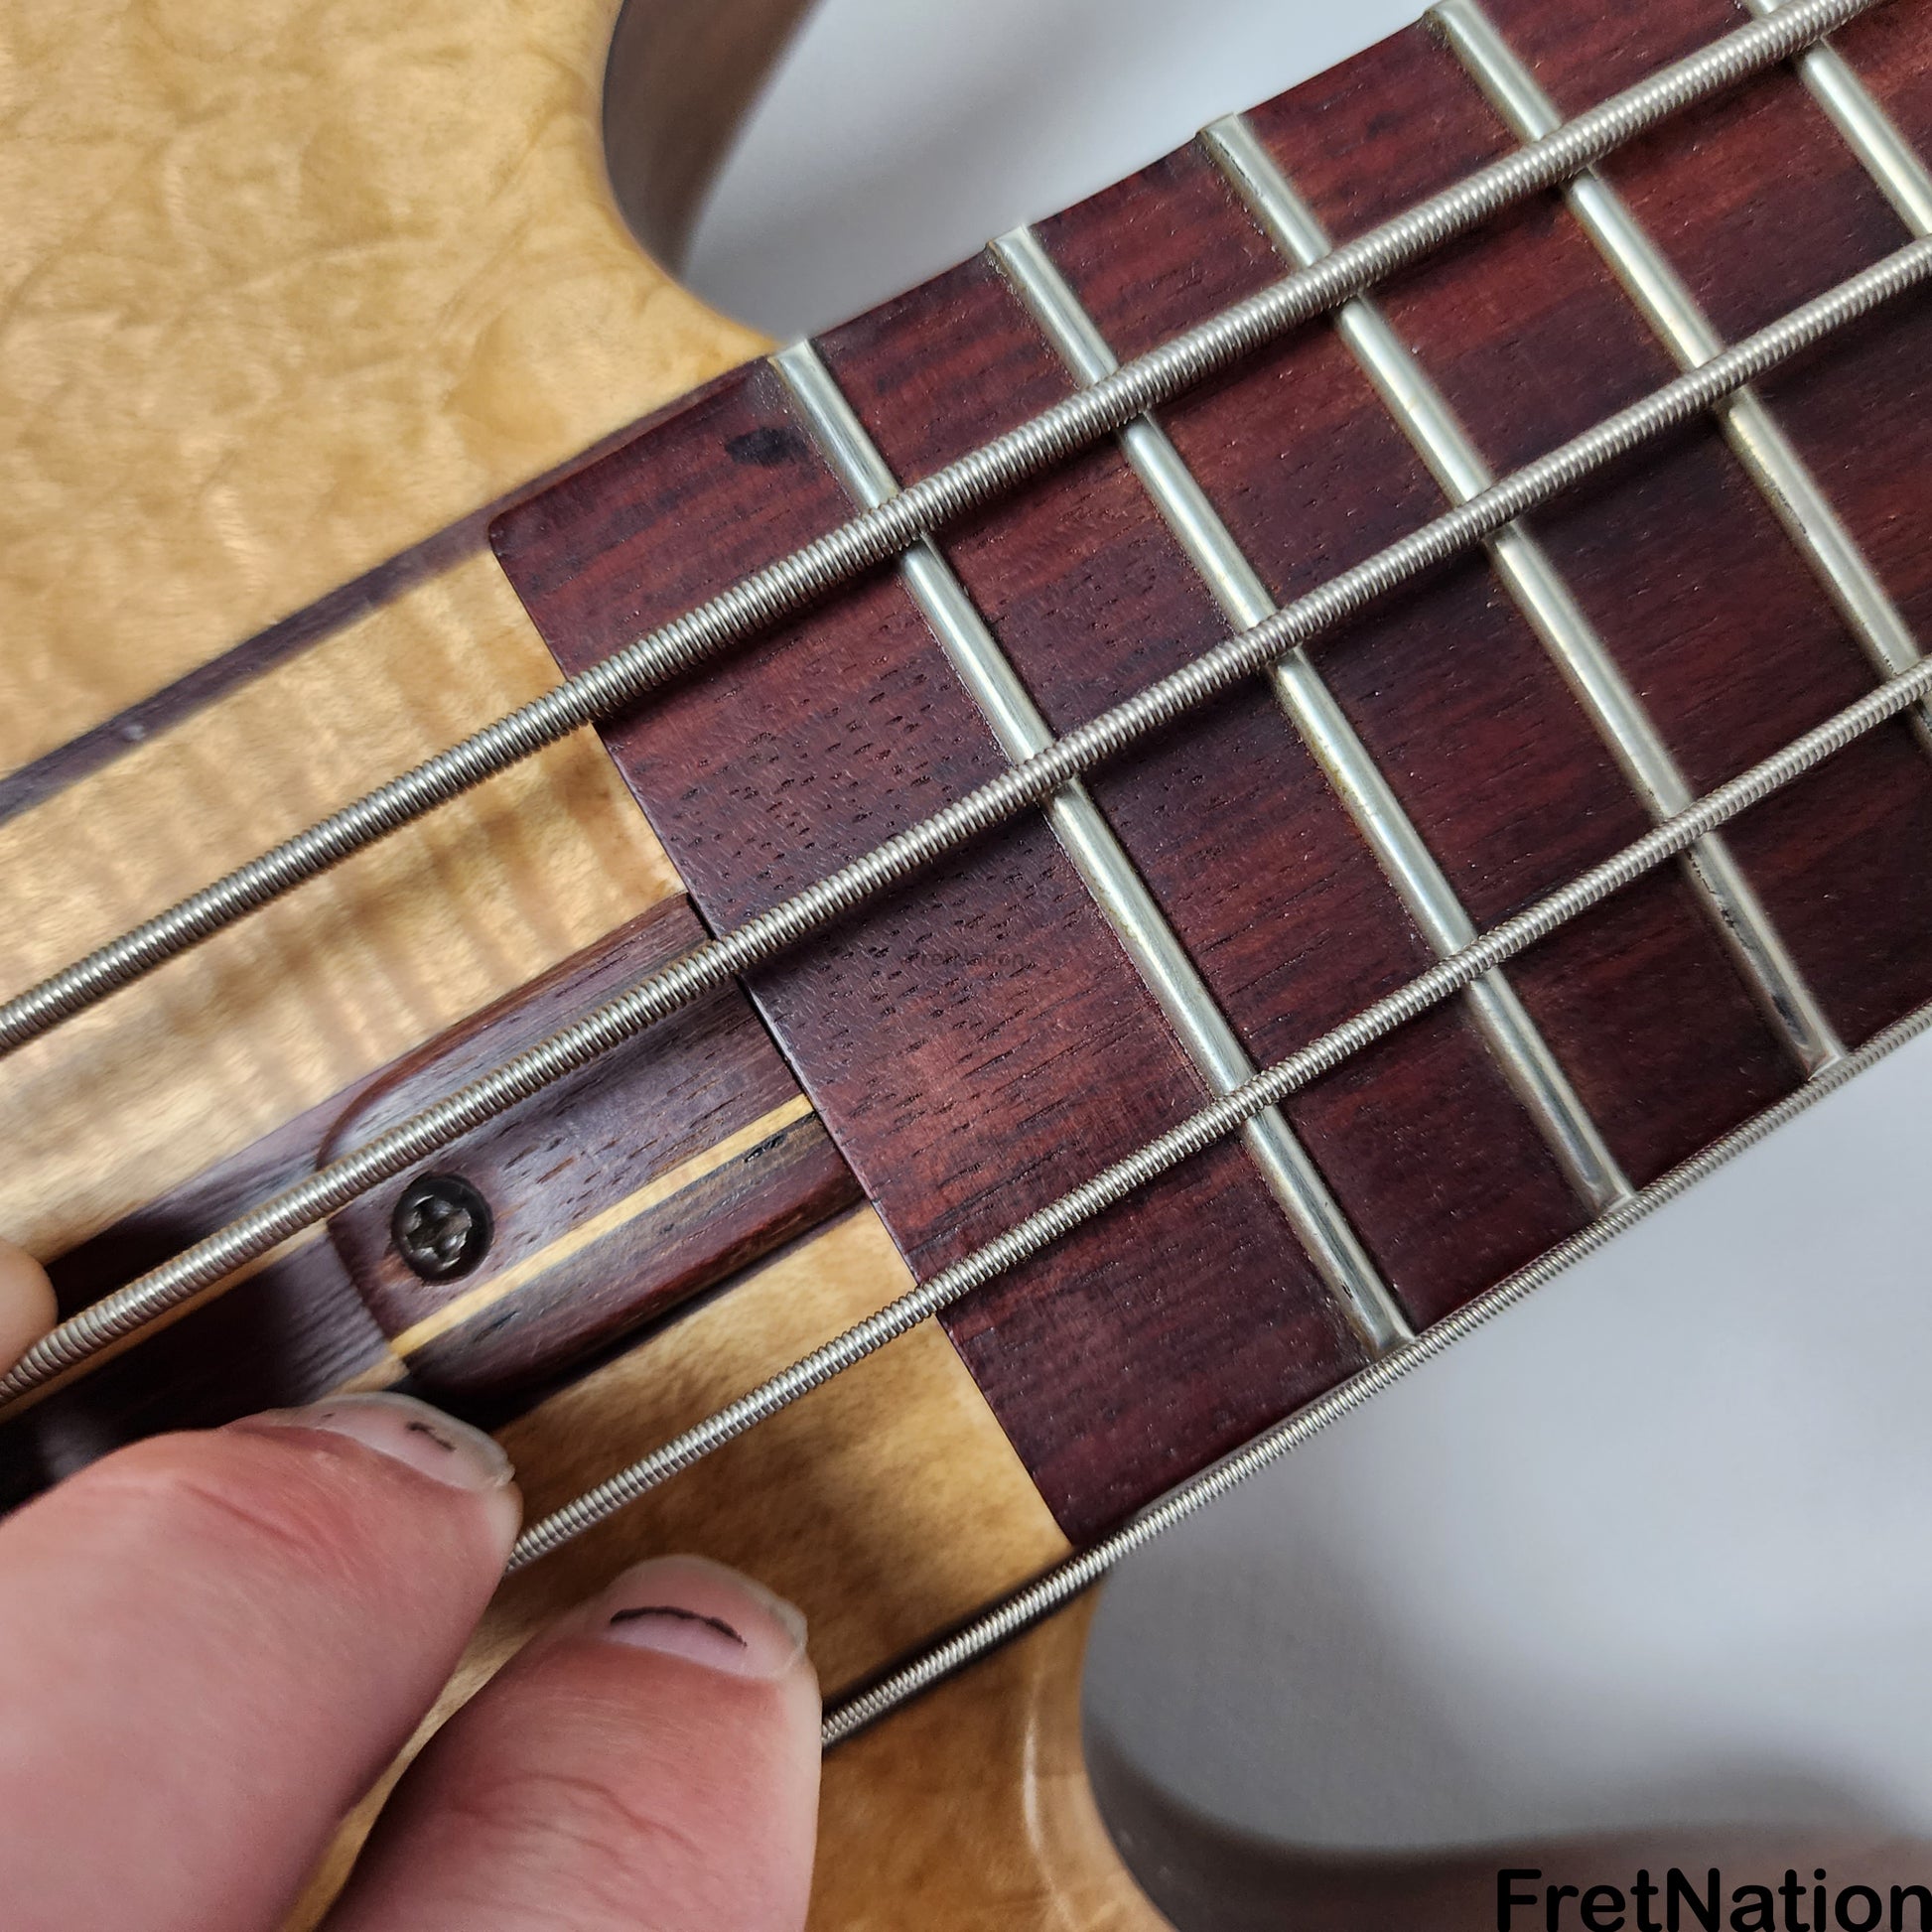 Fret Nation Bob Mick Brian Bromberg Prototype 4-String Semi-Hollow Bass 7.82lbs